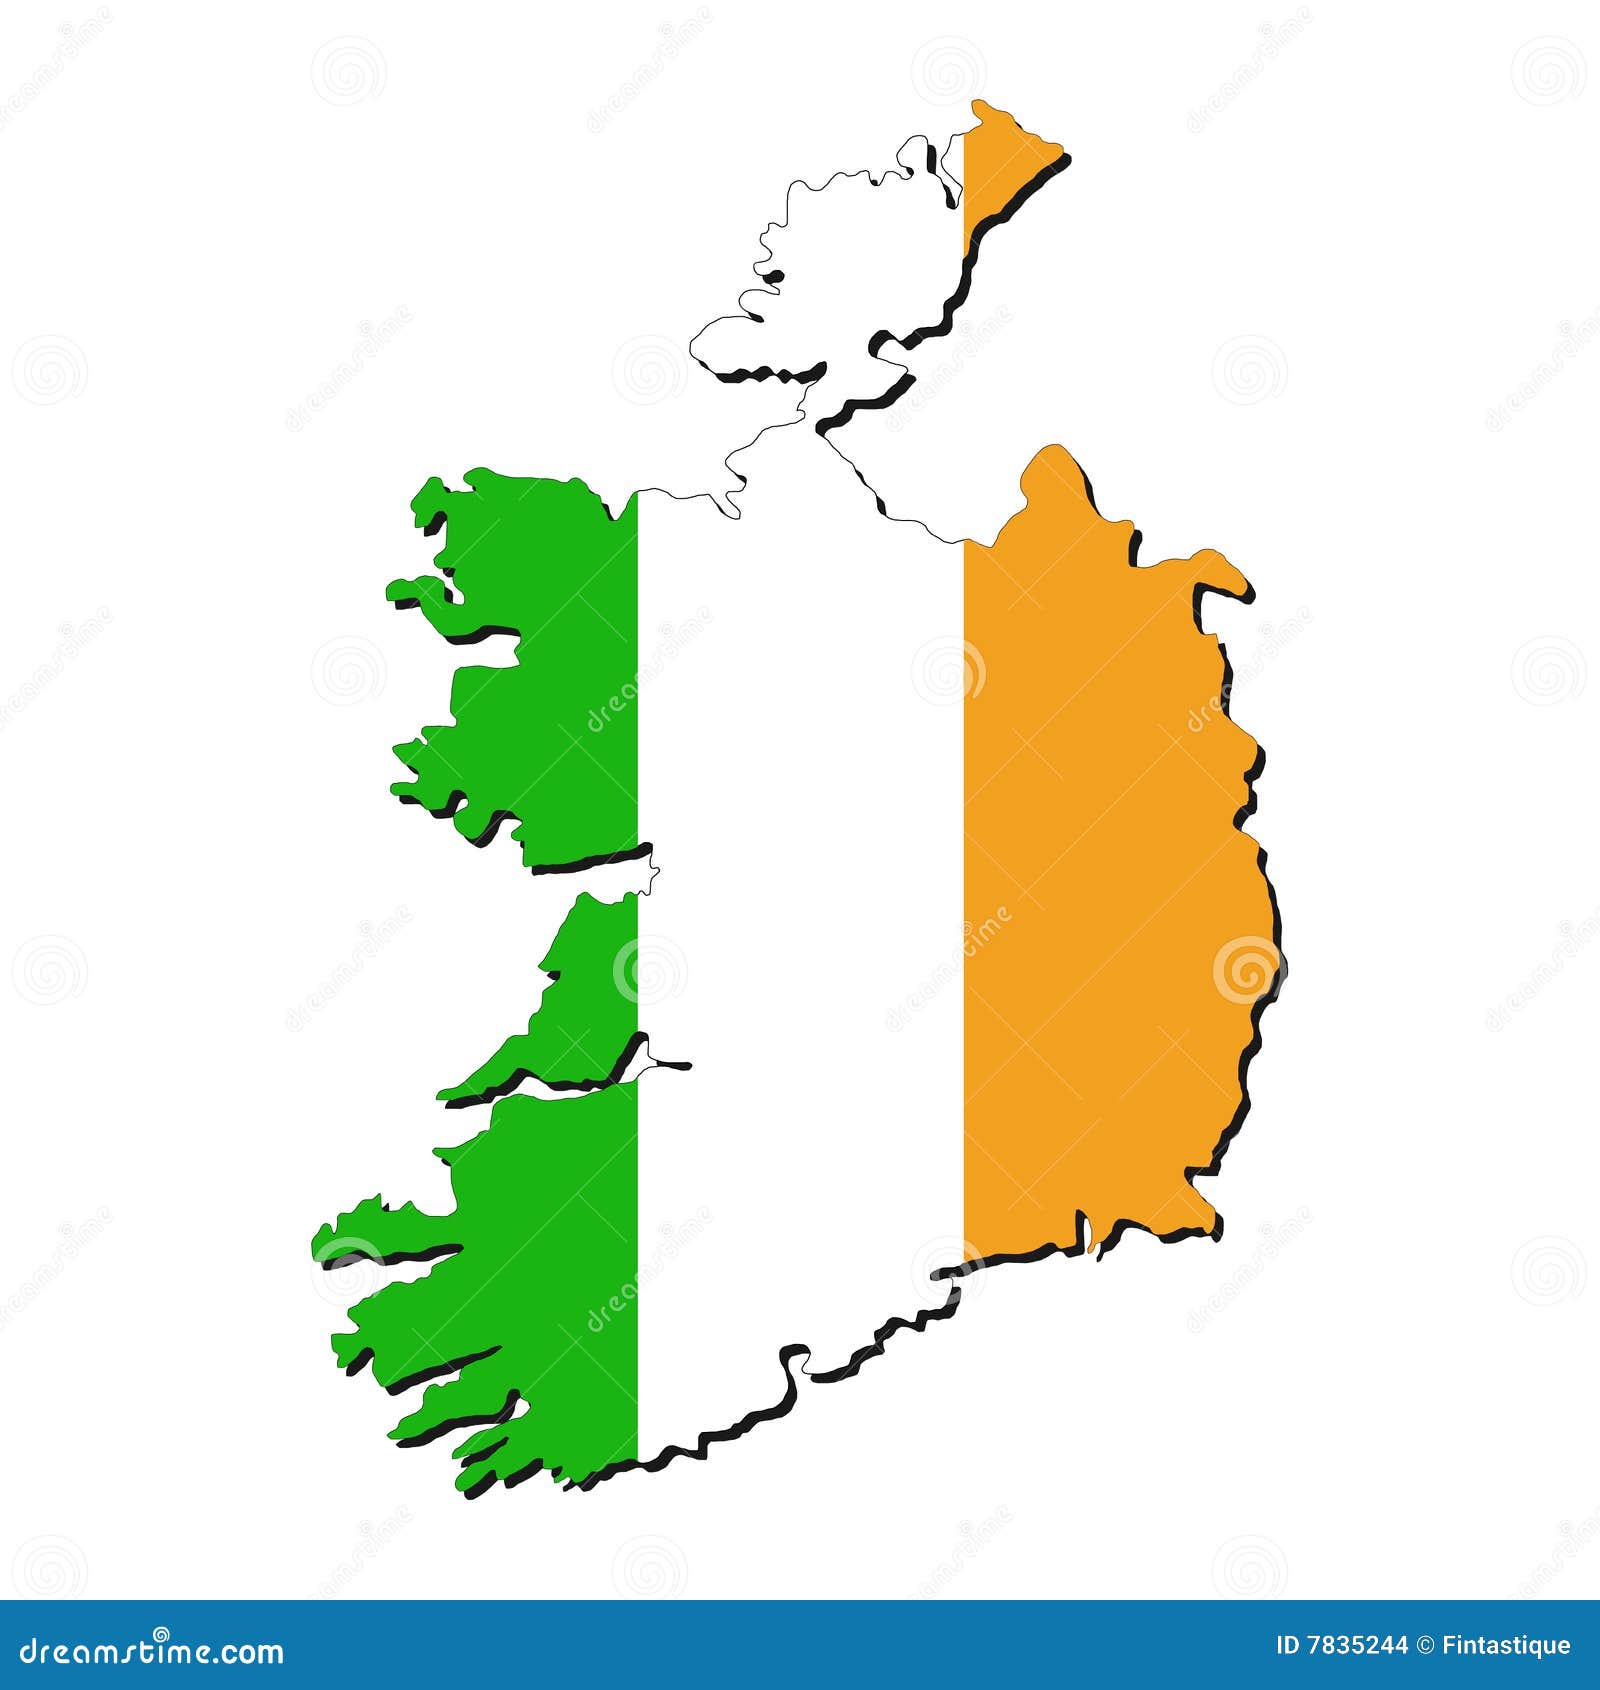 clipart map of ireland - photo #22